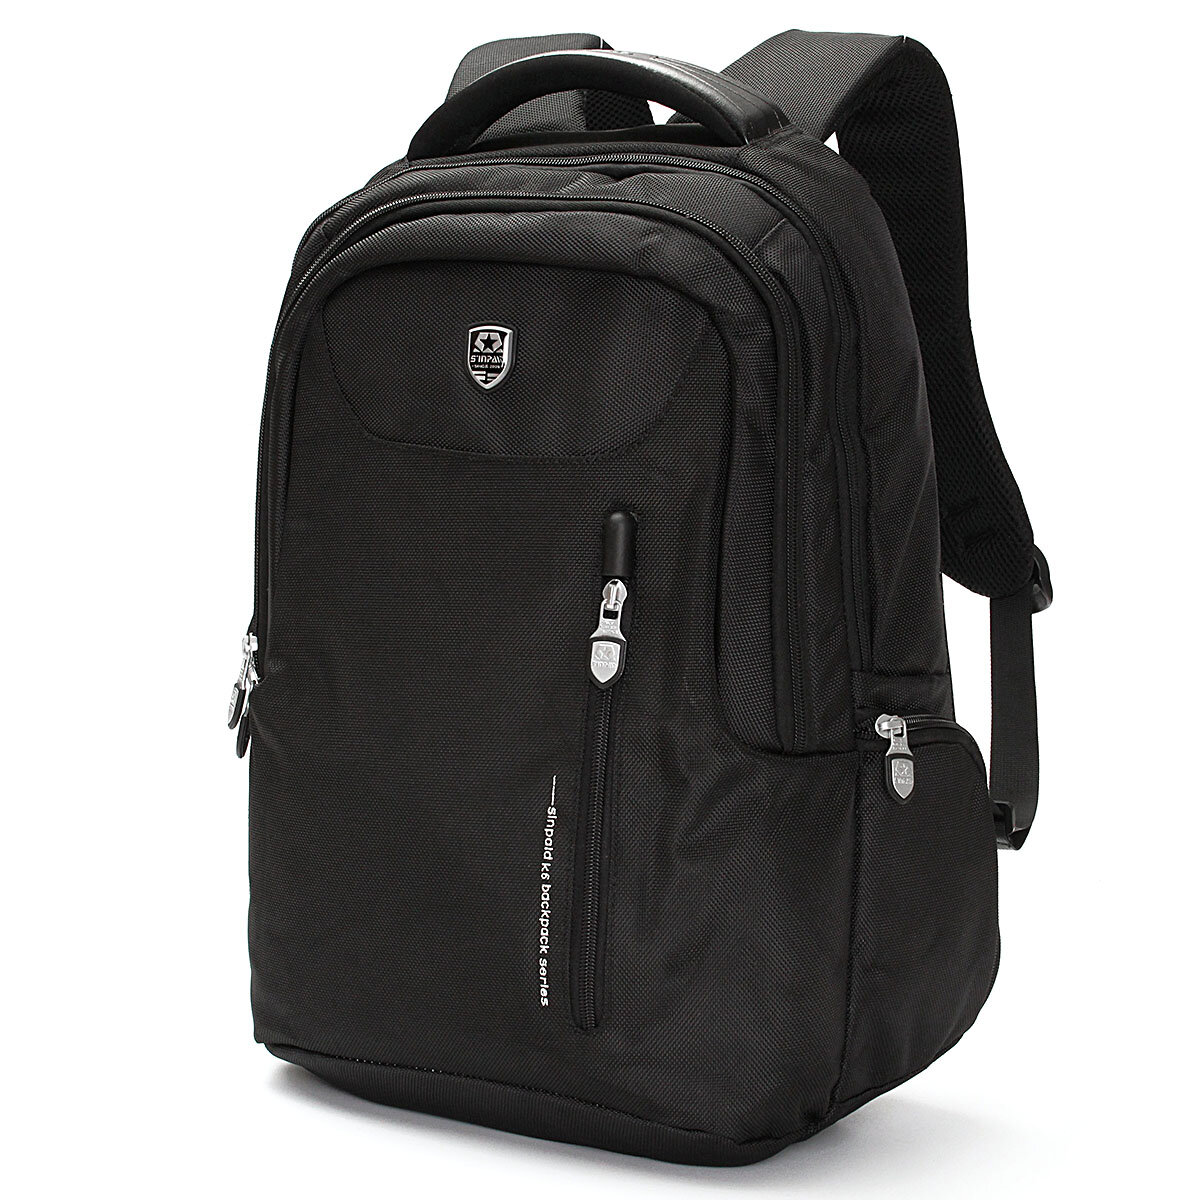 Business Backpack Laptop Computer Bag Schoolbag Shoulders Storage Bag Waterproof for 15 inch Compute